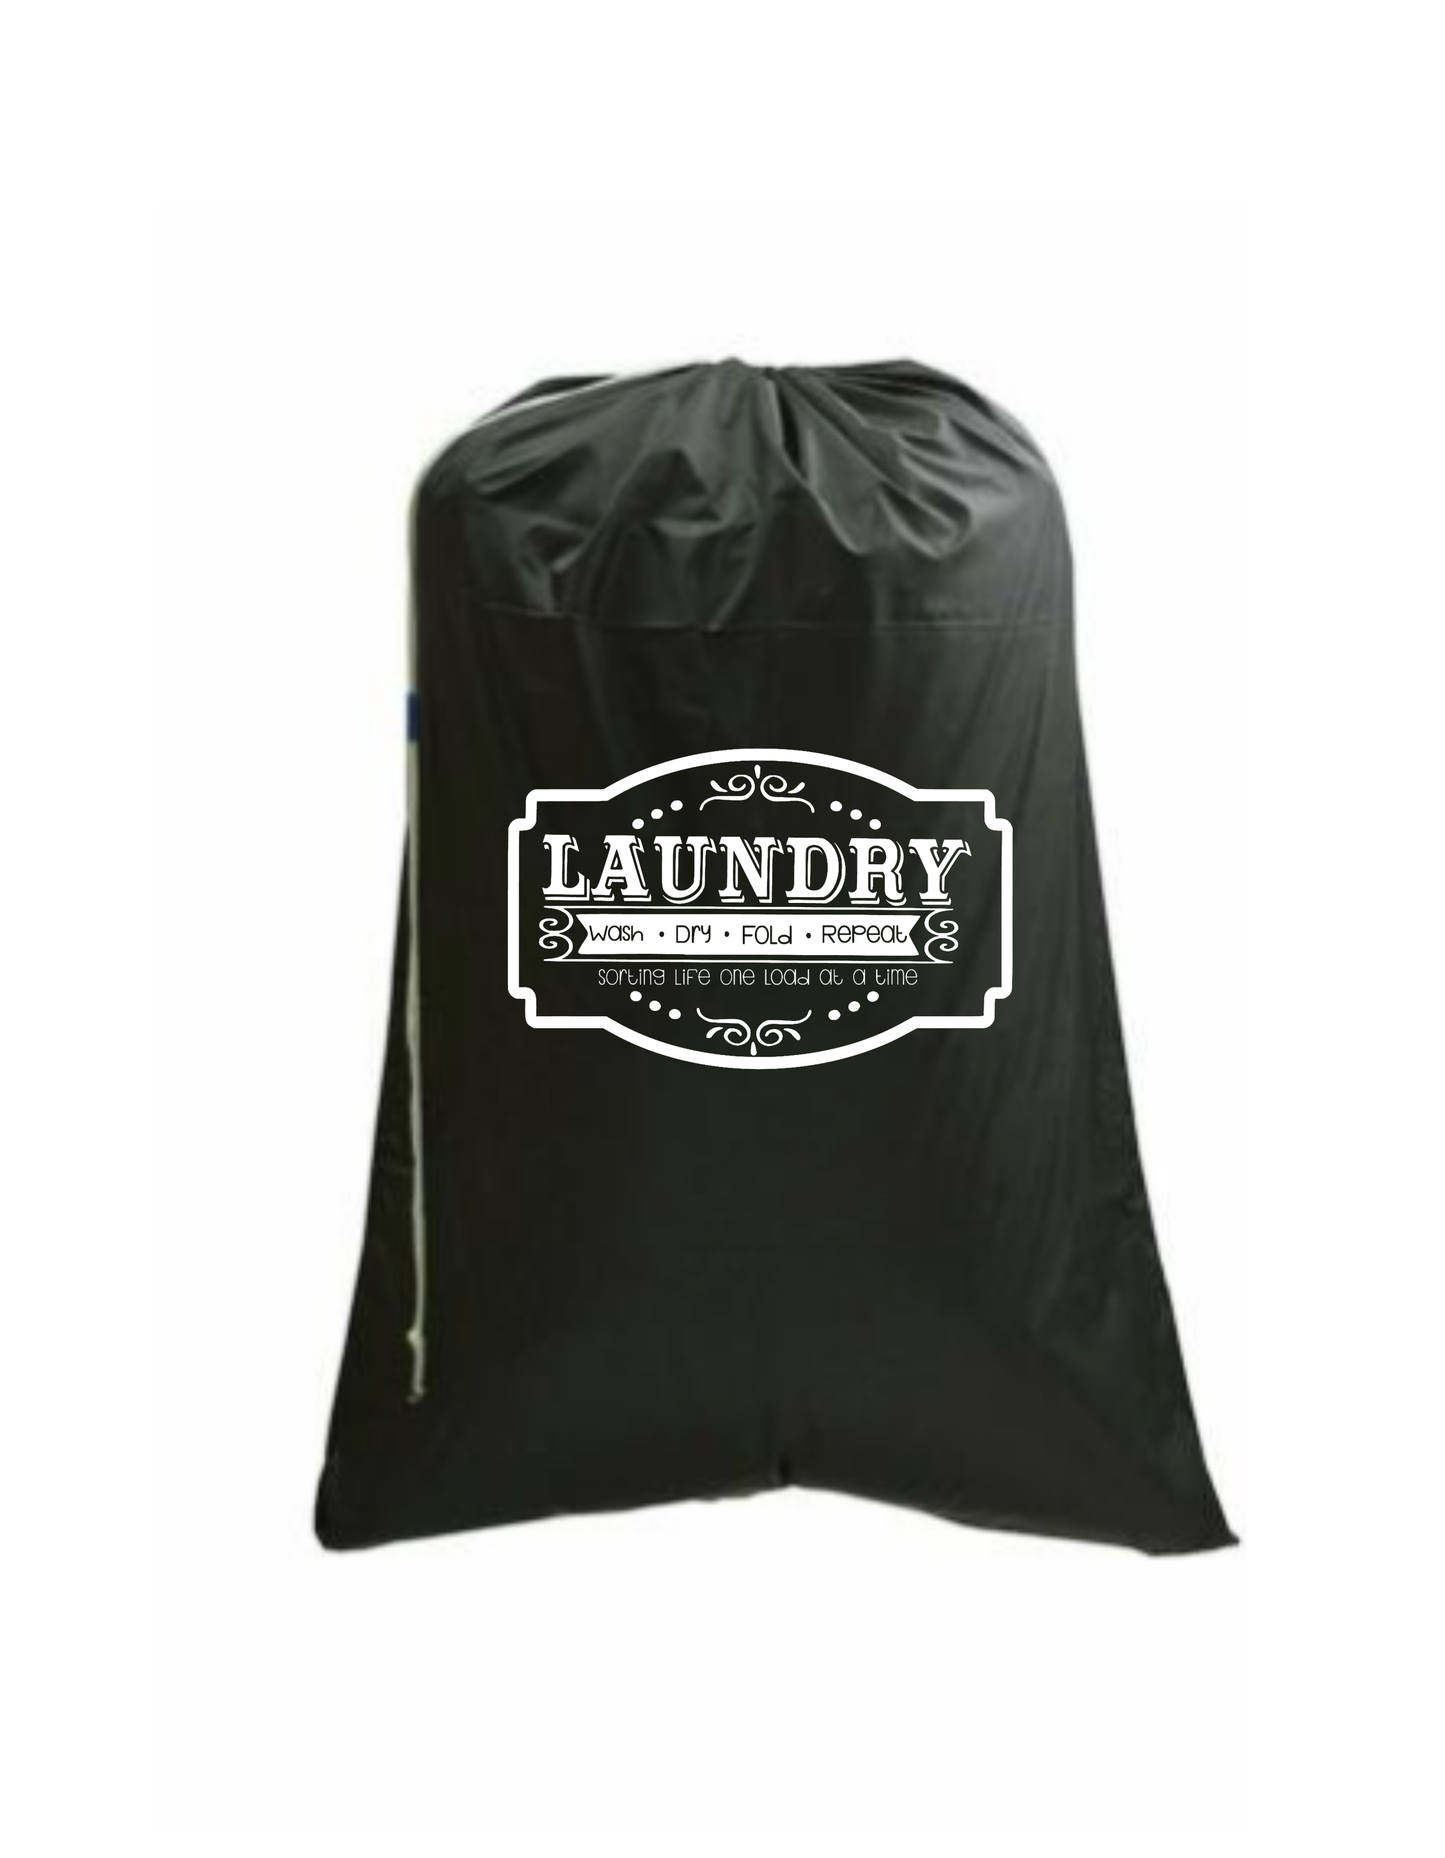 Laundry - Black Laundry Bag - Mister Snarky's